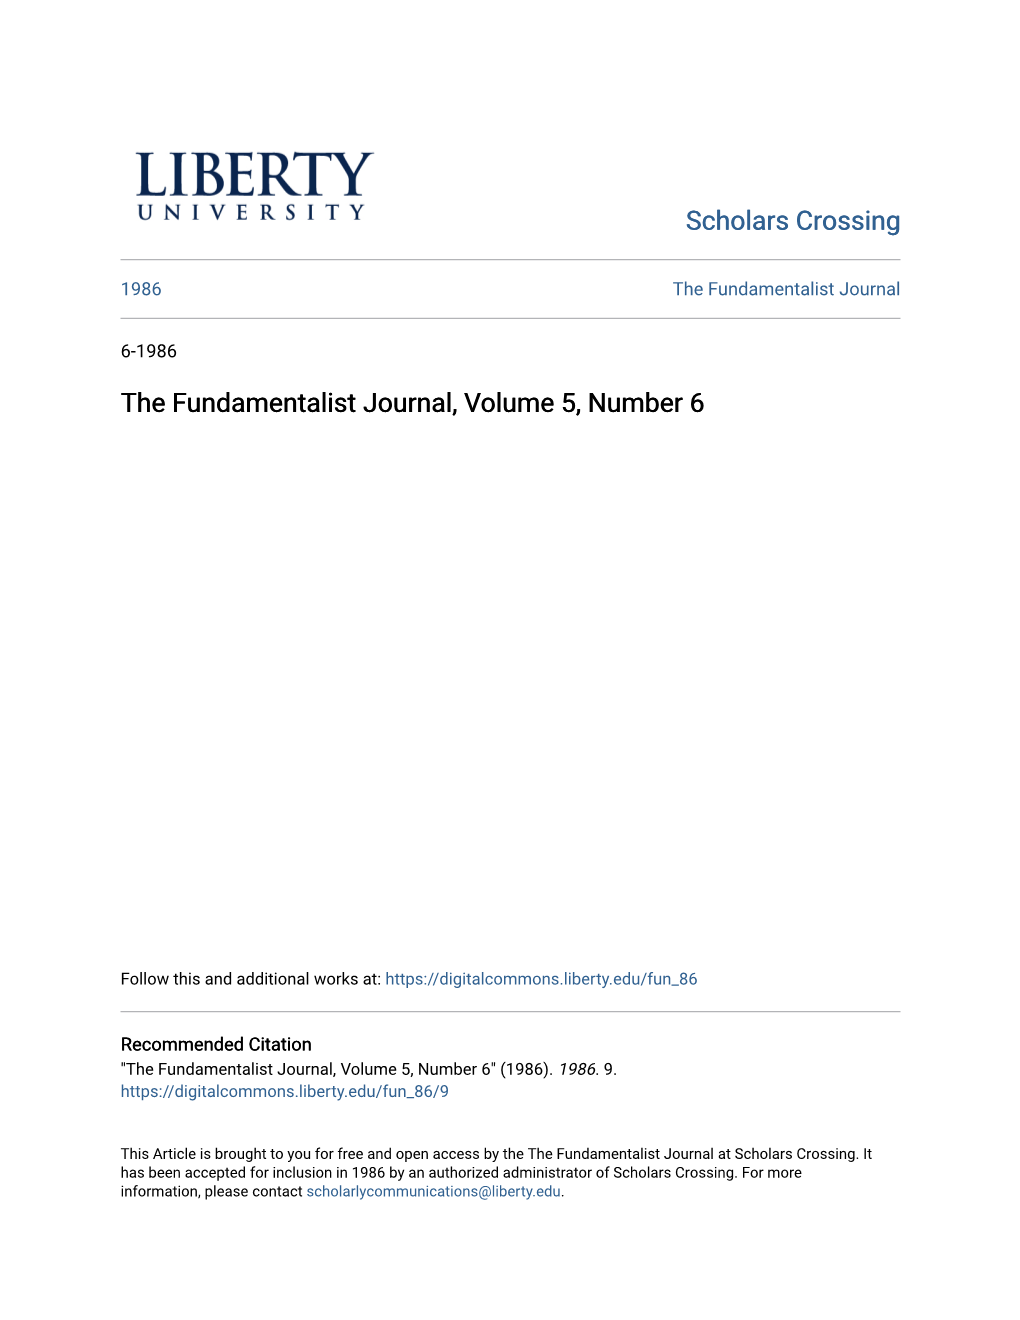 The Fundamentalist Journal, Volume 5, Number 6